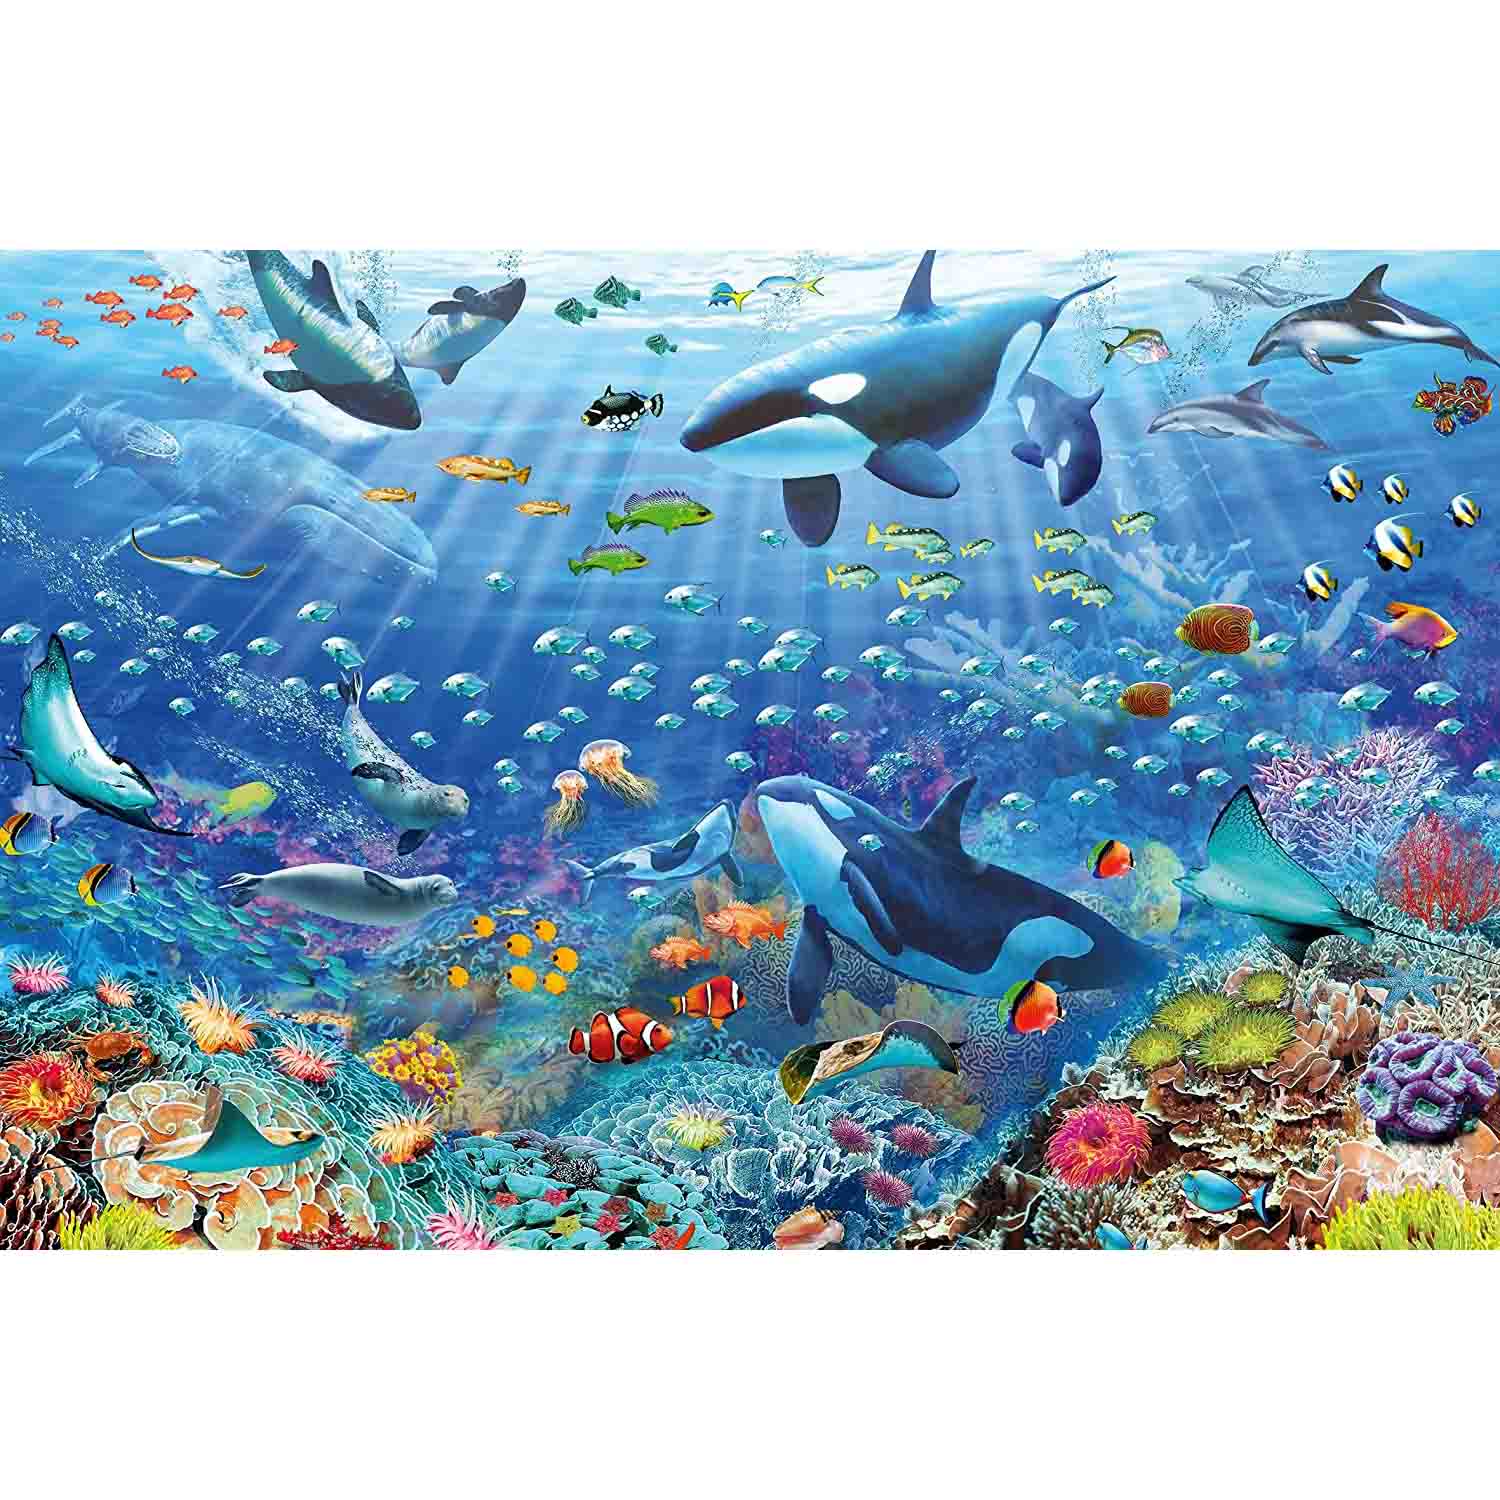 Puzzle lumea subacvatica colorata, 3000 piese